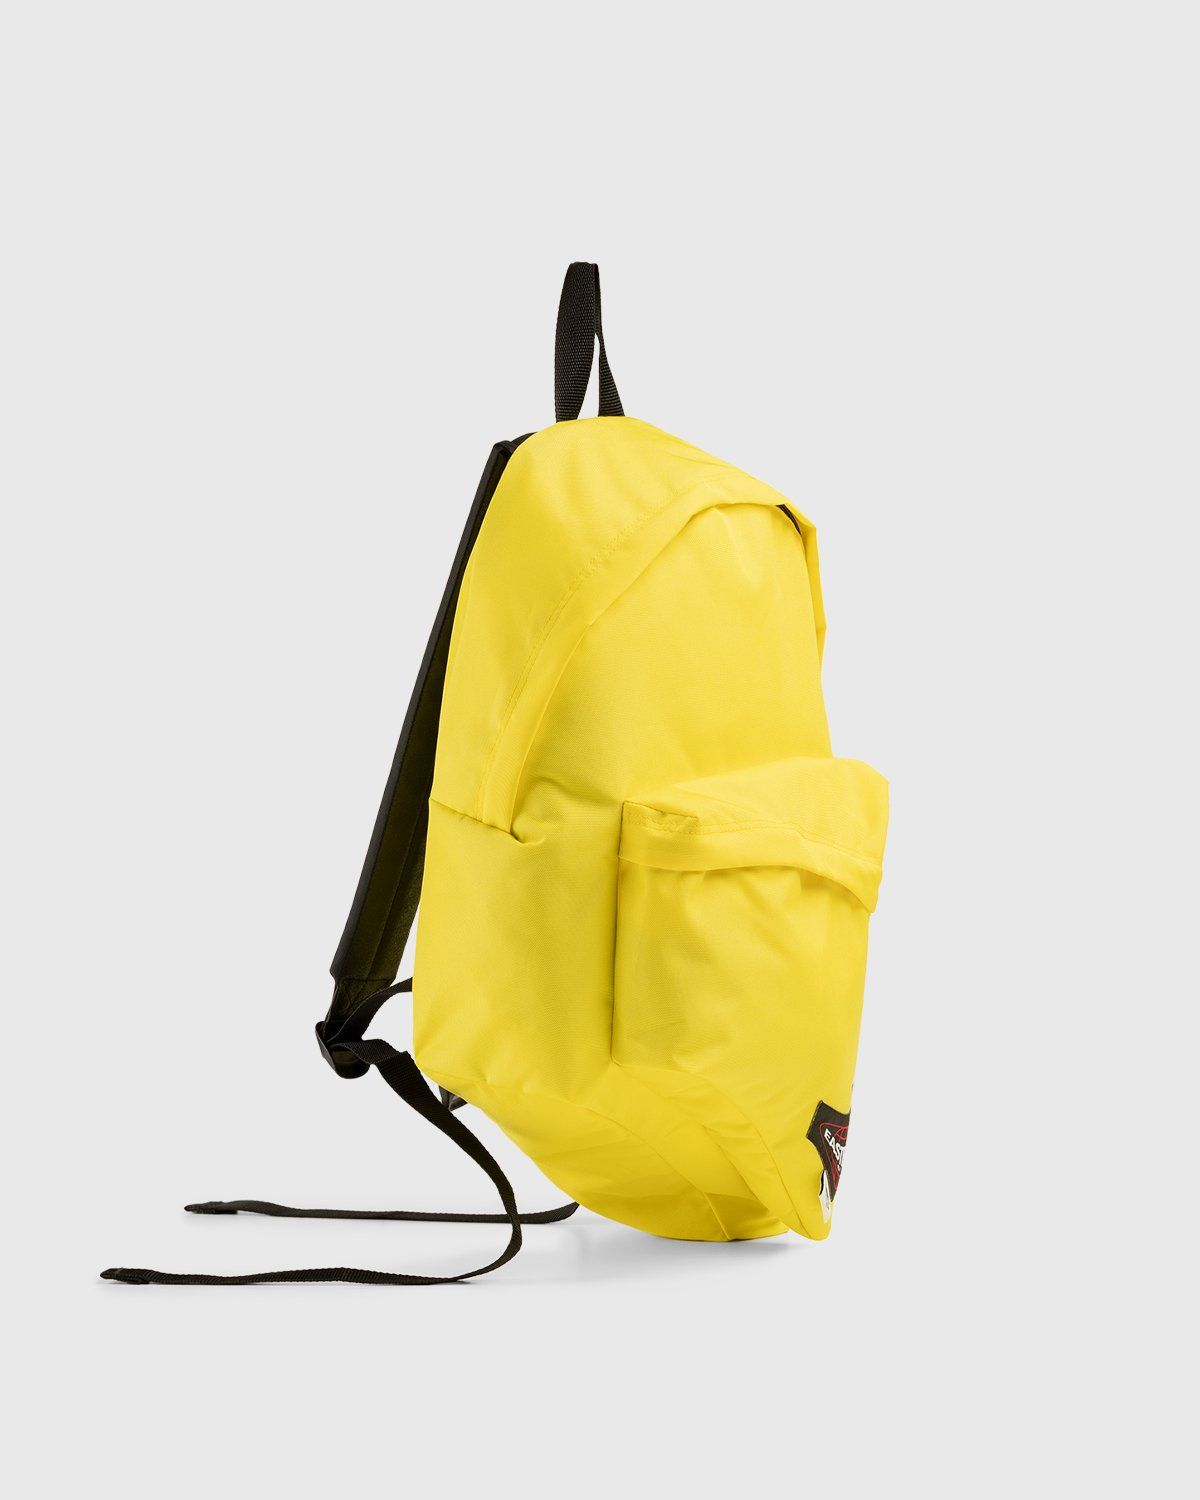 MM6 Maison Margiela x Eastpak – Zaino Backpack Yellow - Backpacks - Yellow - Image 2